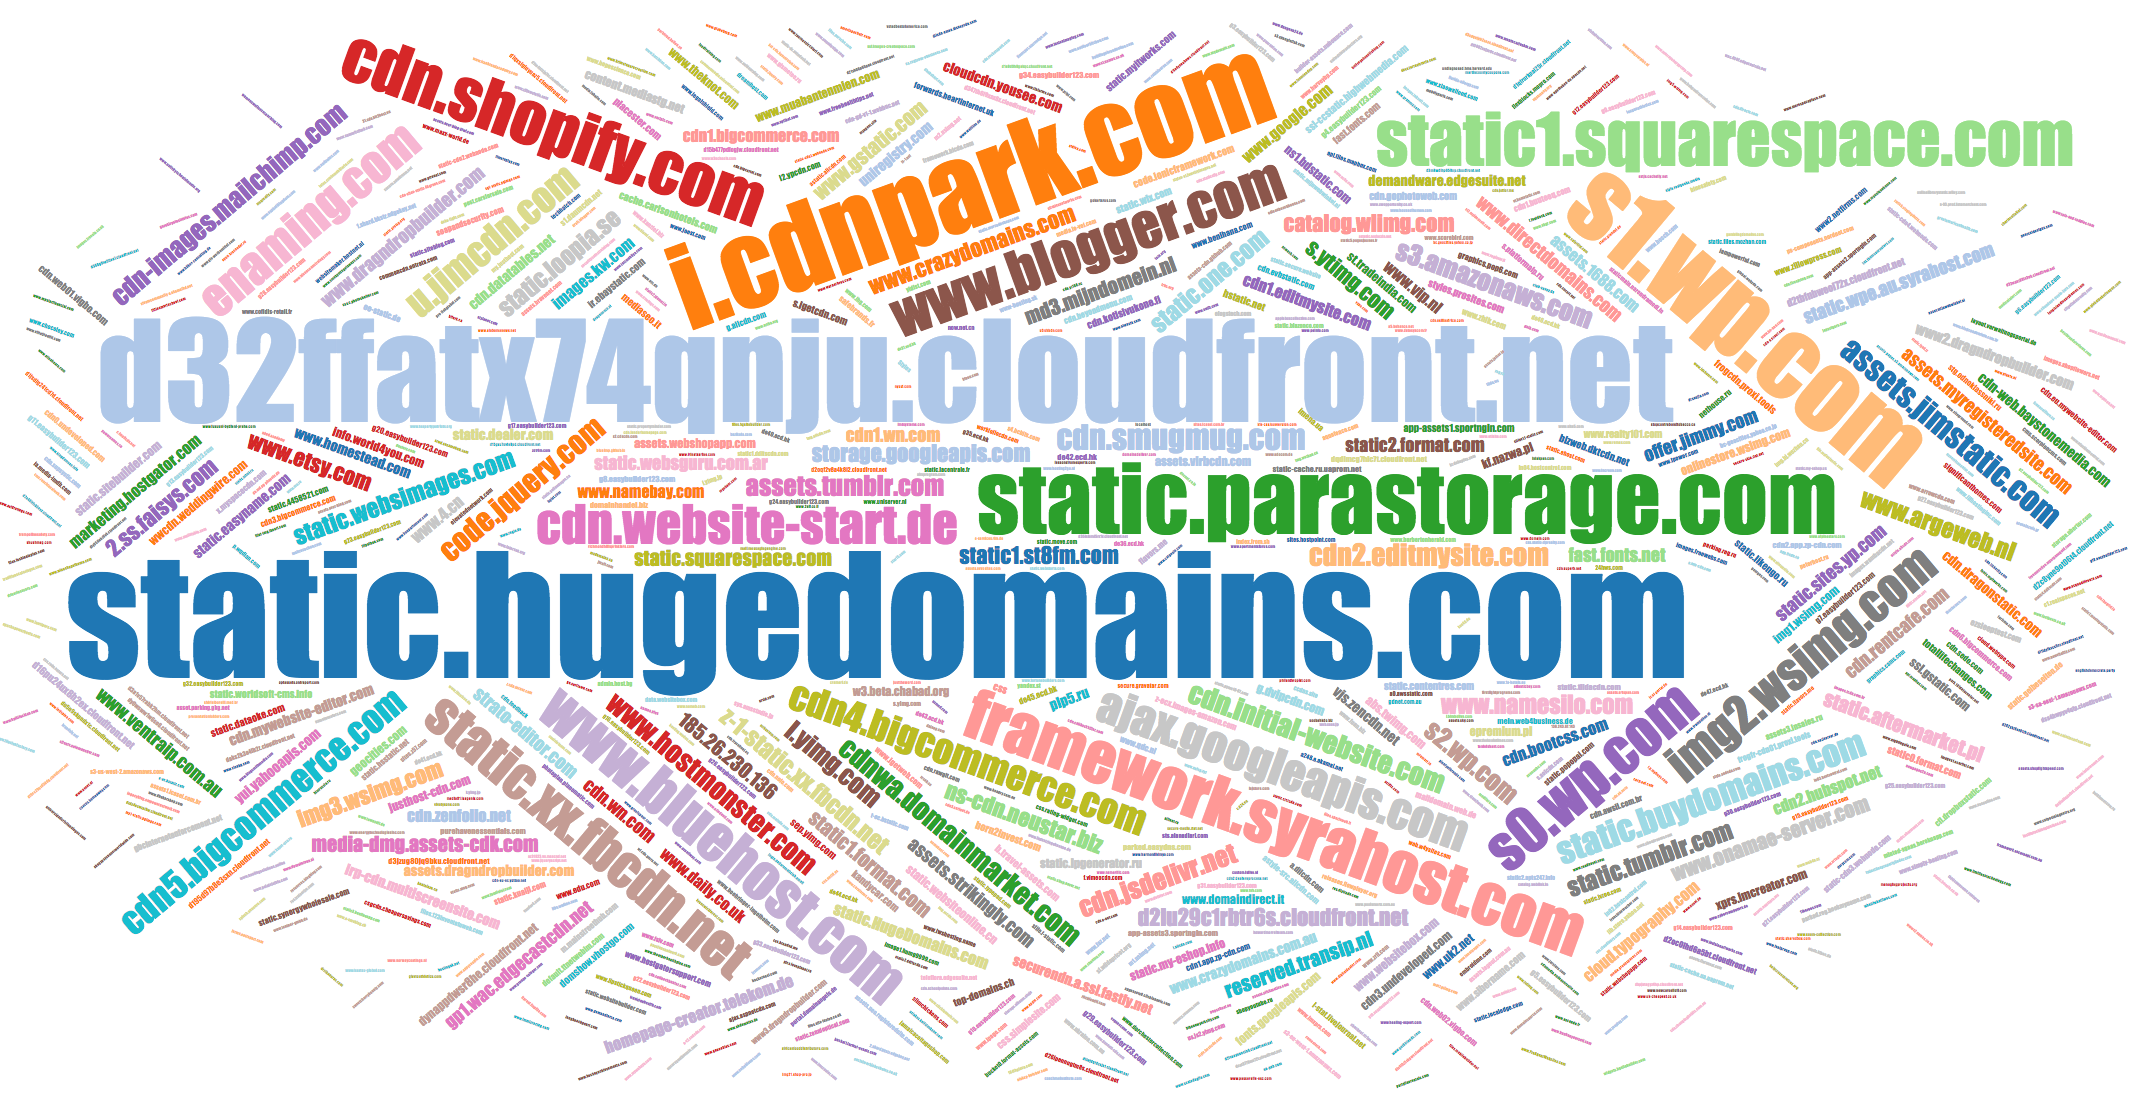 Popular names of CSS domains enaming.com, error.gmo.jp, etc.